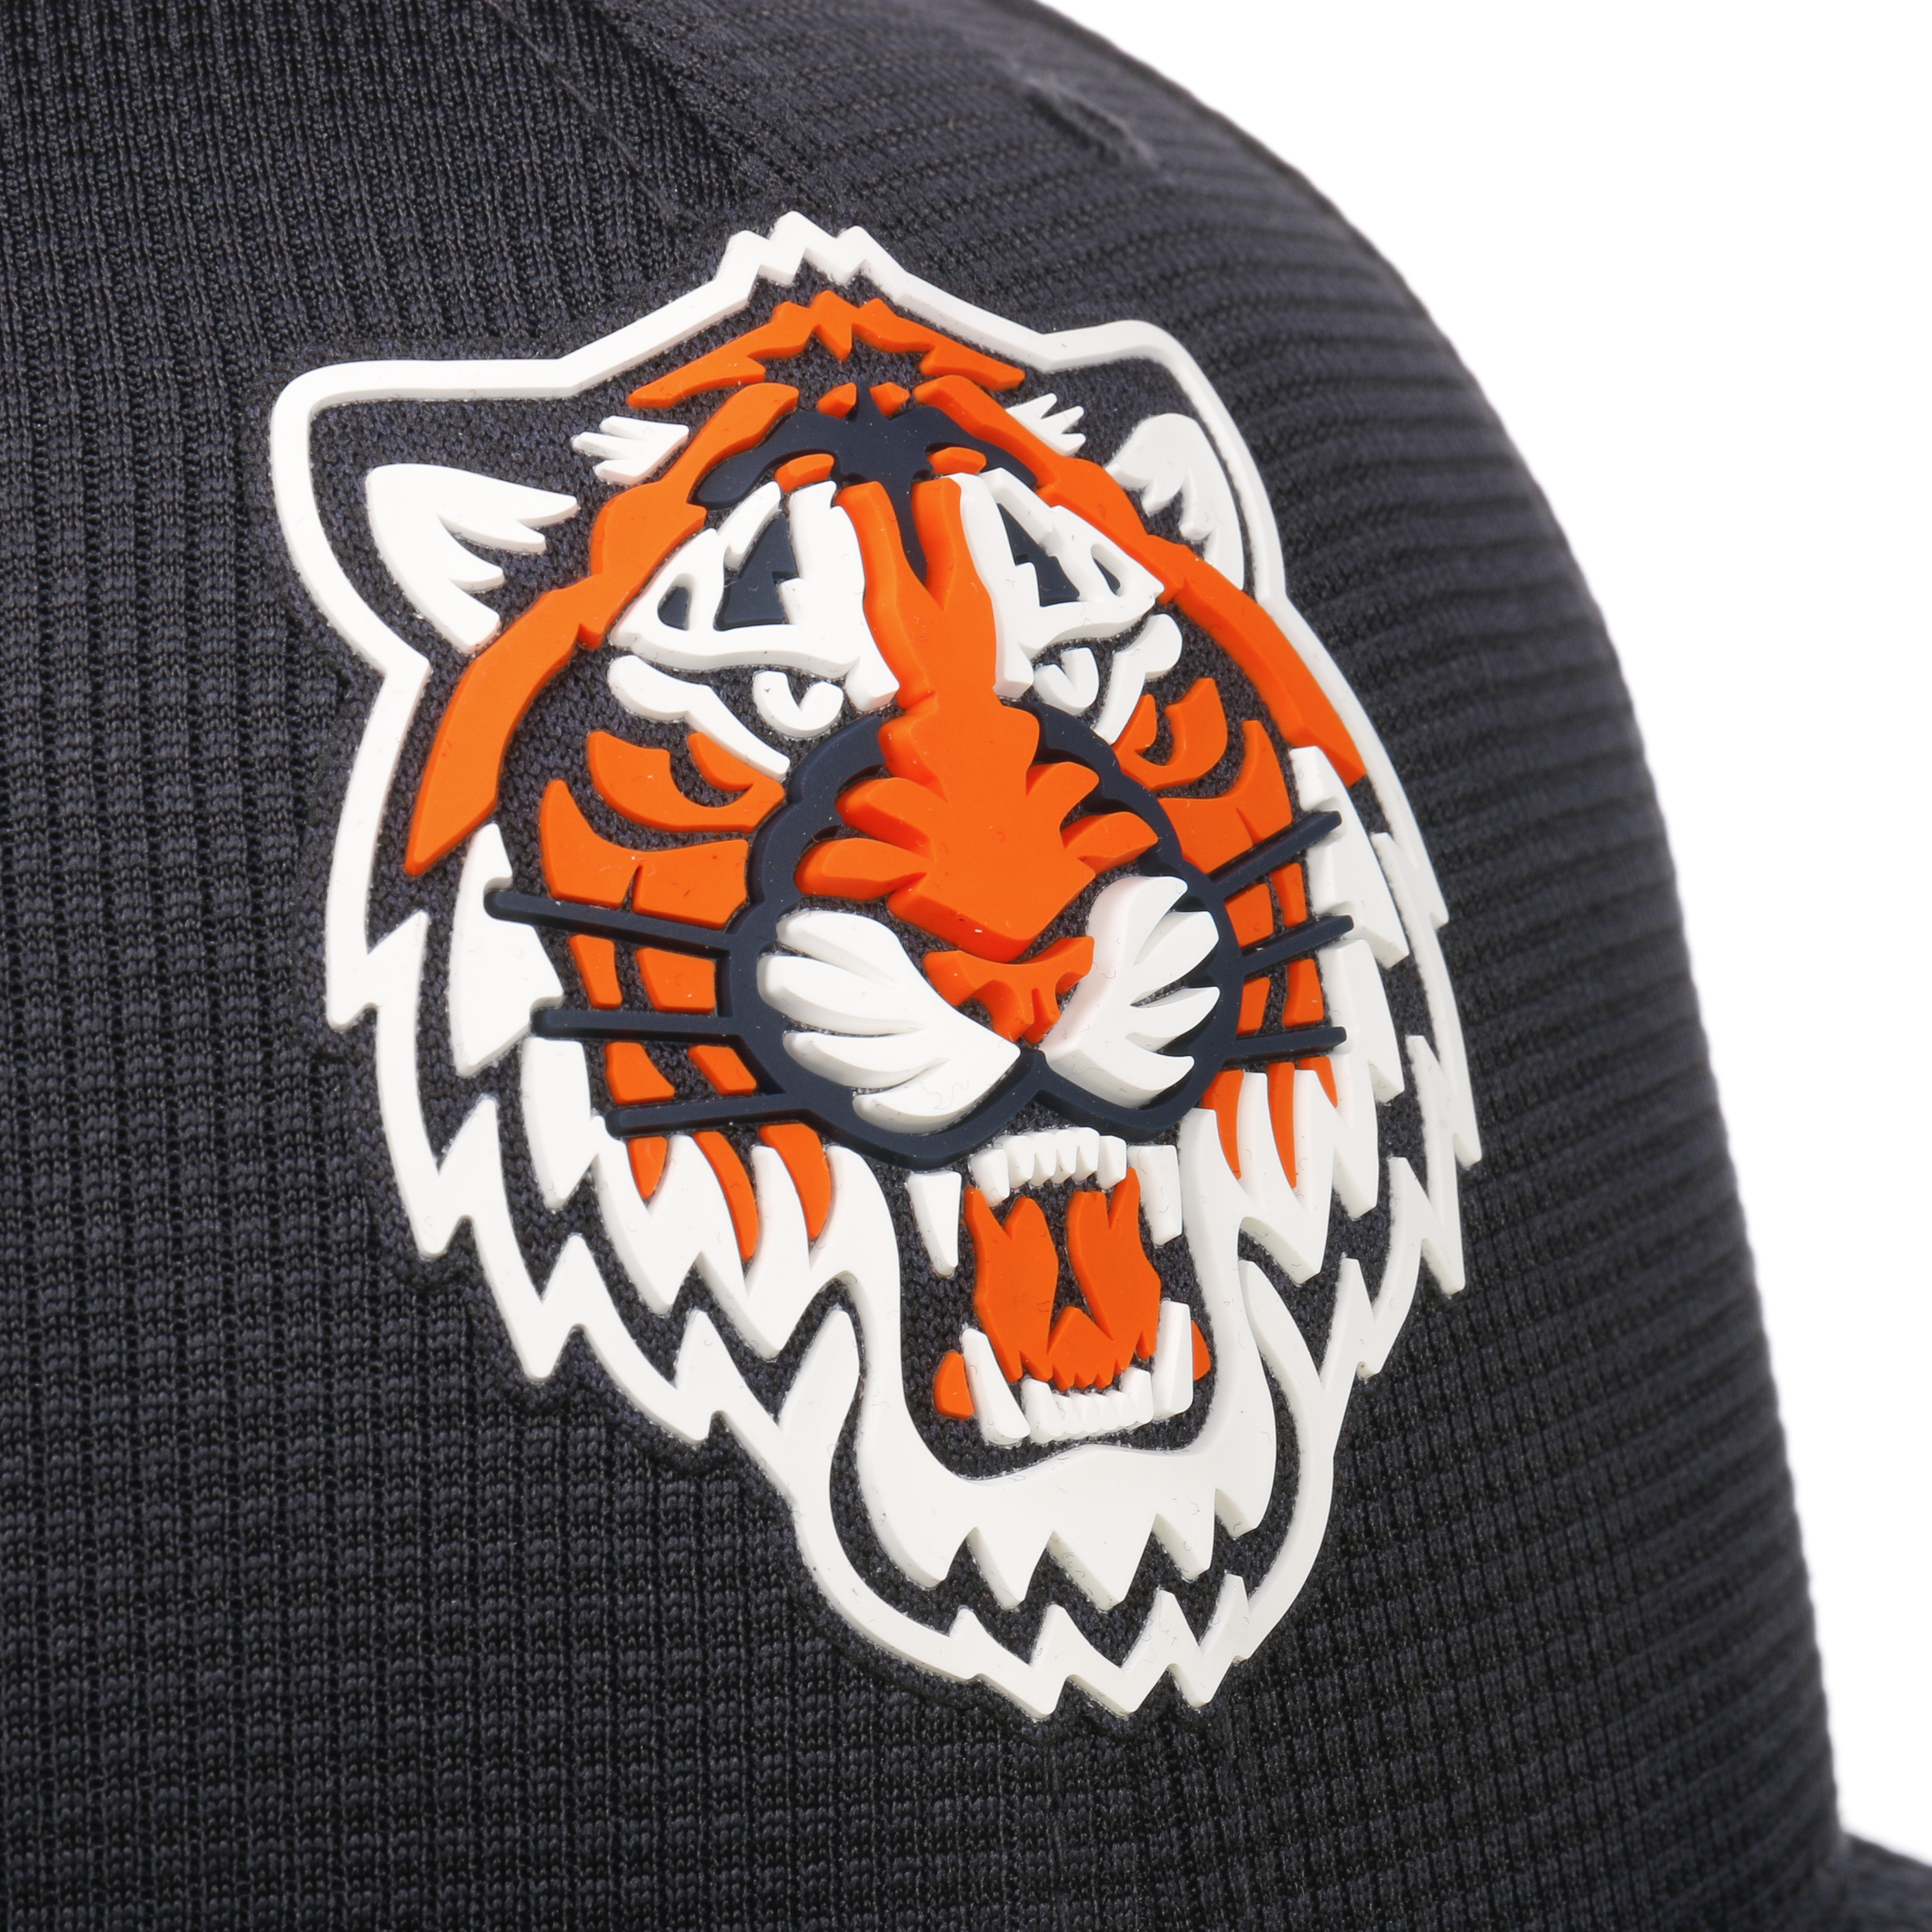 New Era Fitted Hat MLB Detroit Tigers ONE SIZE Orange Black Cap Shiny Logo